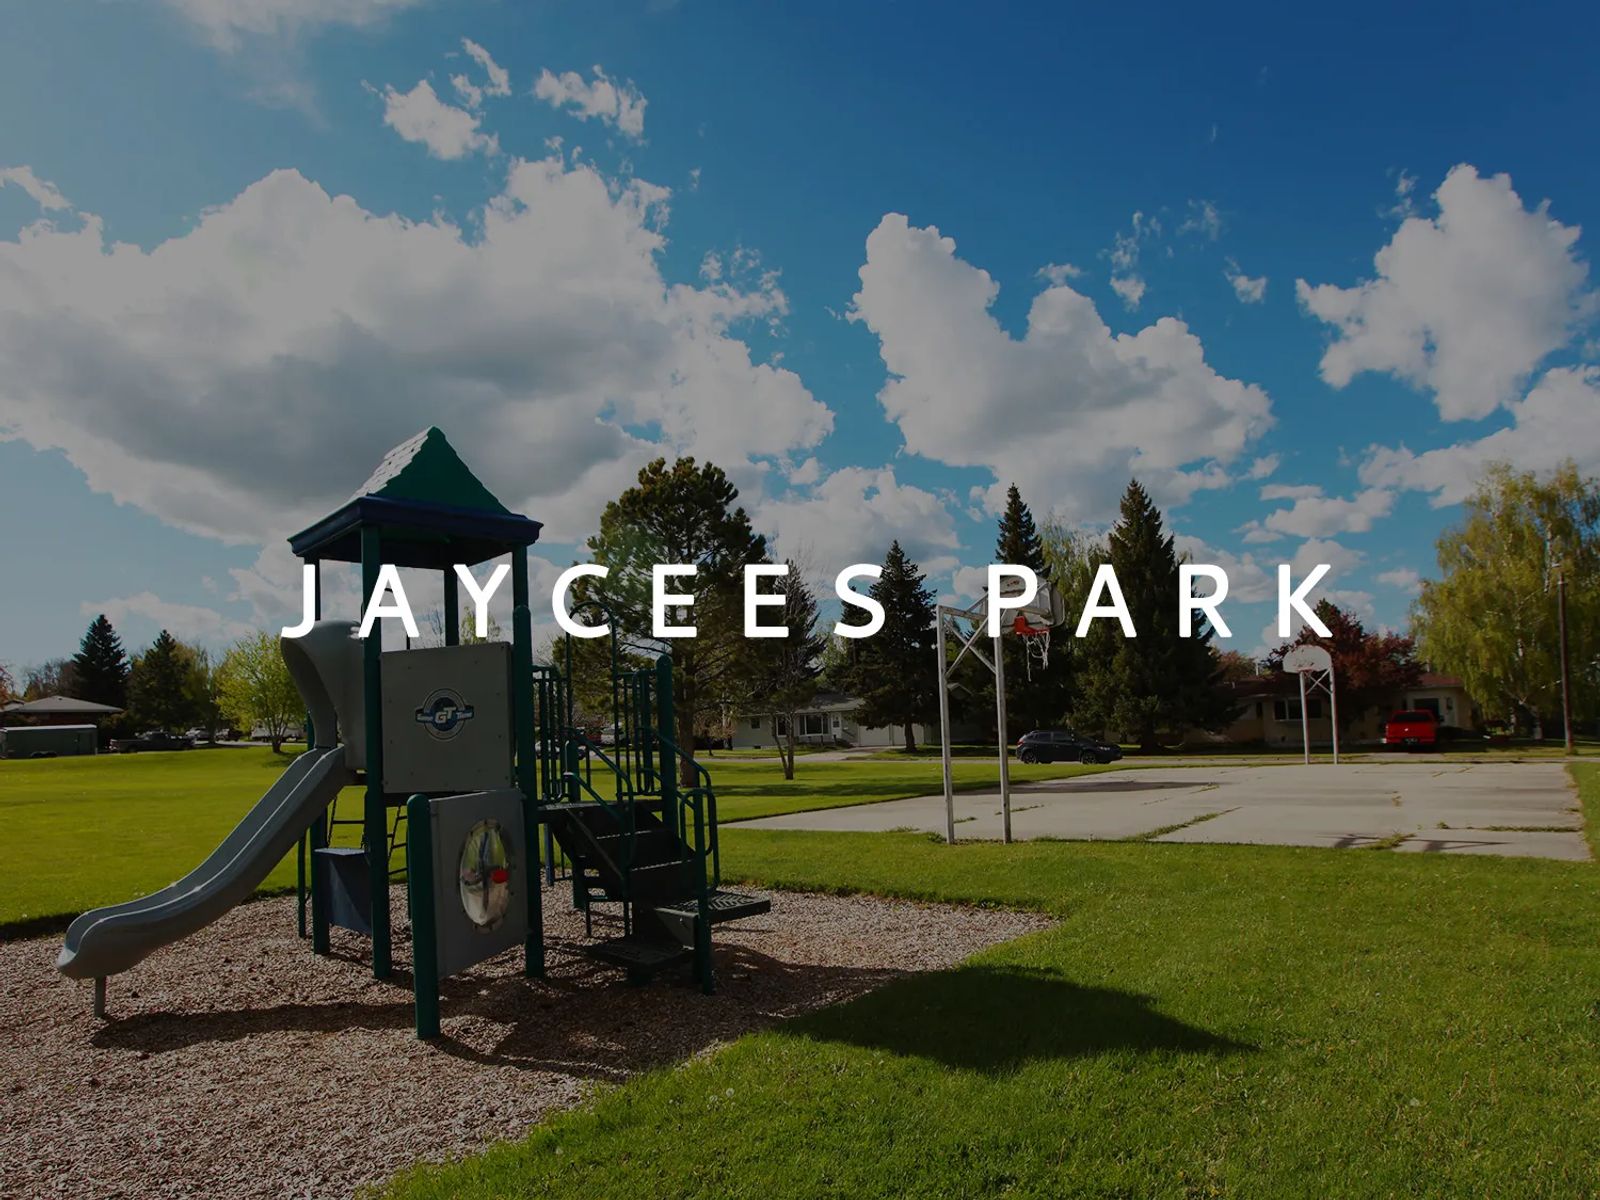 Jaycees Park in Lewistown, Montana